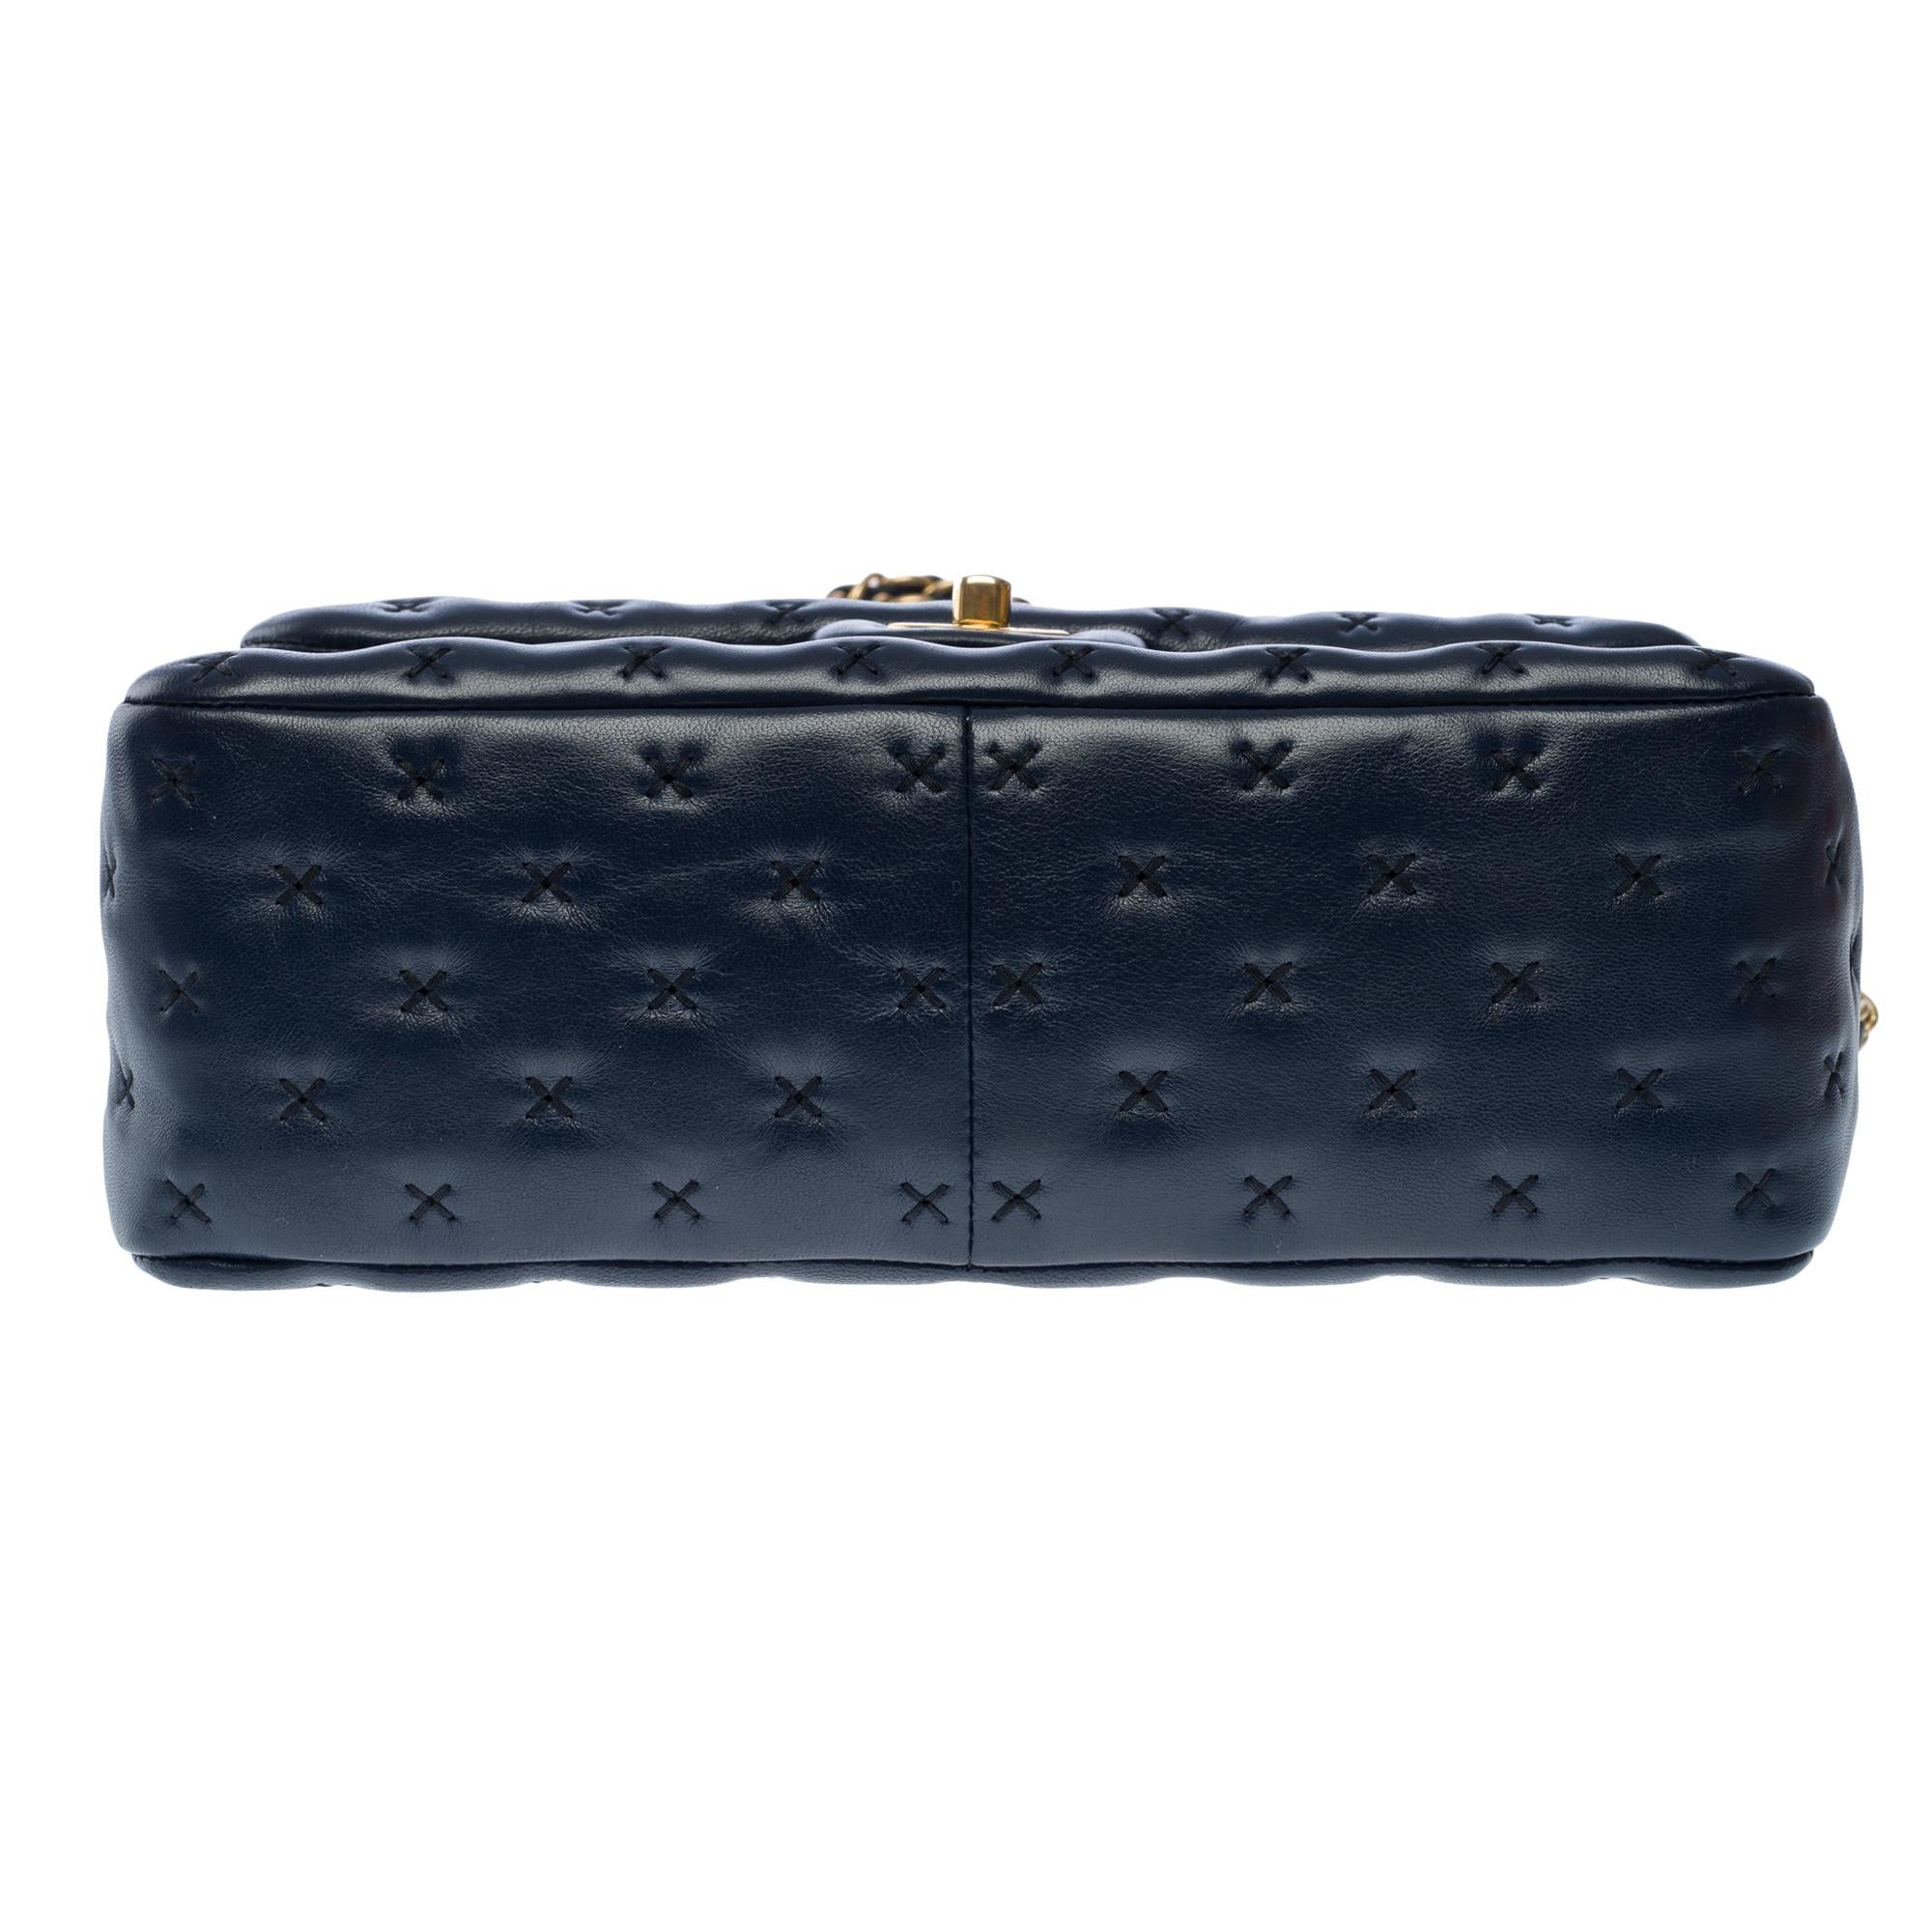 FW2016 Paris-Rome- Chanel Coco handle handbag in Navy blue lambskin leather, GHW 6